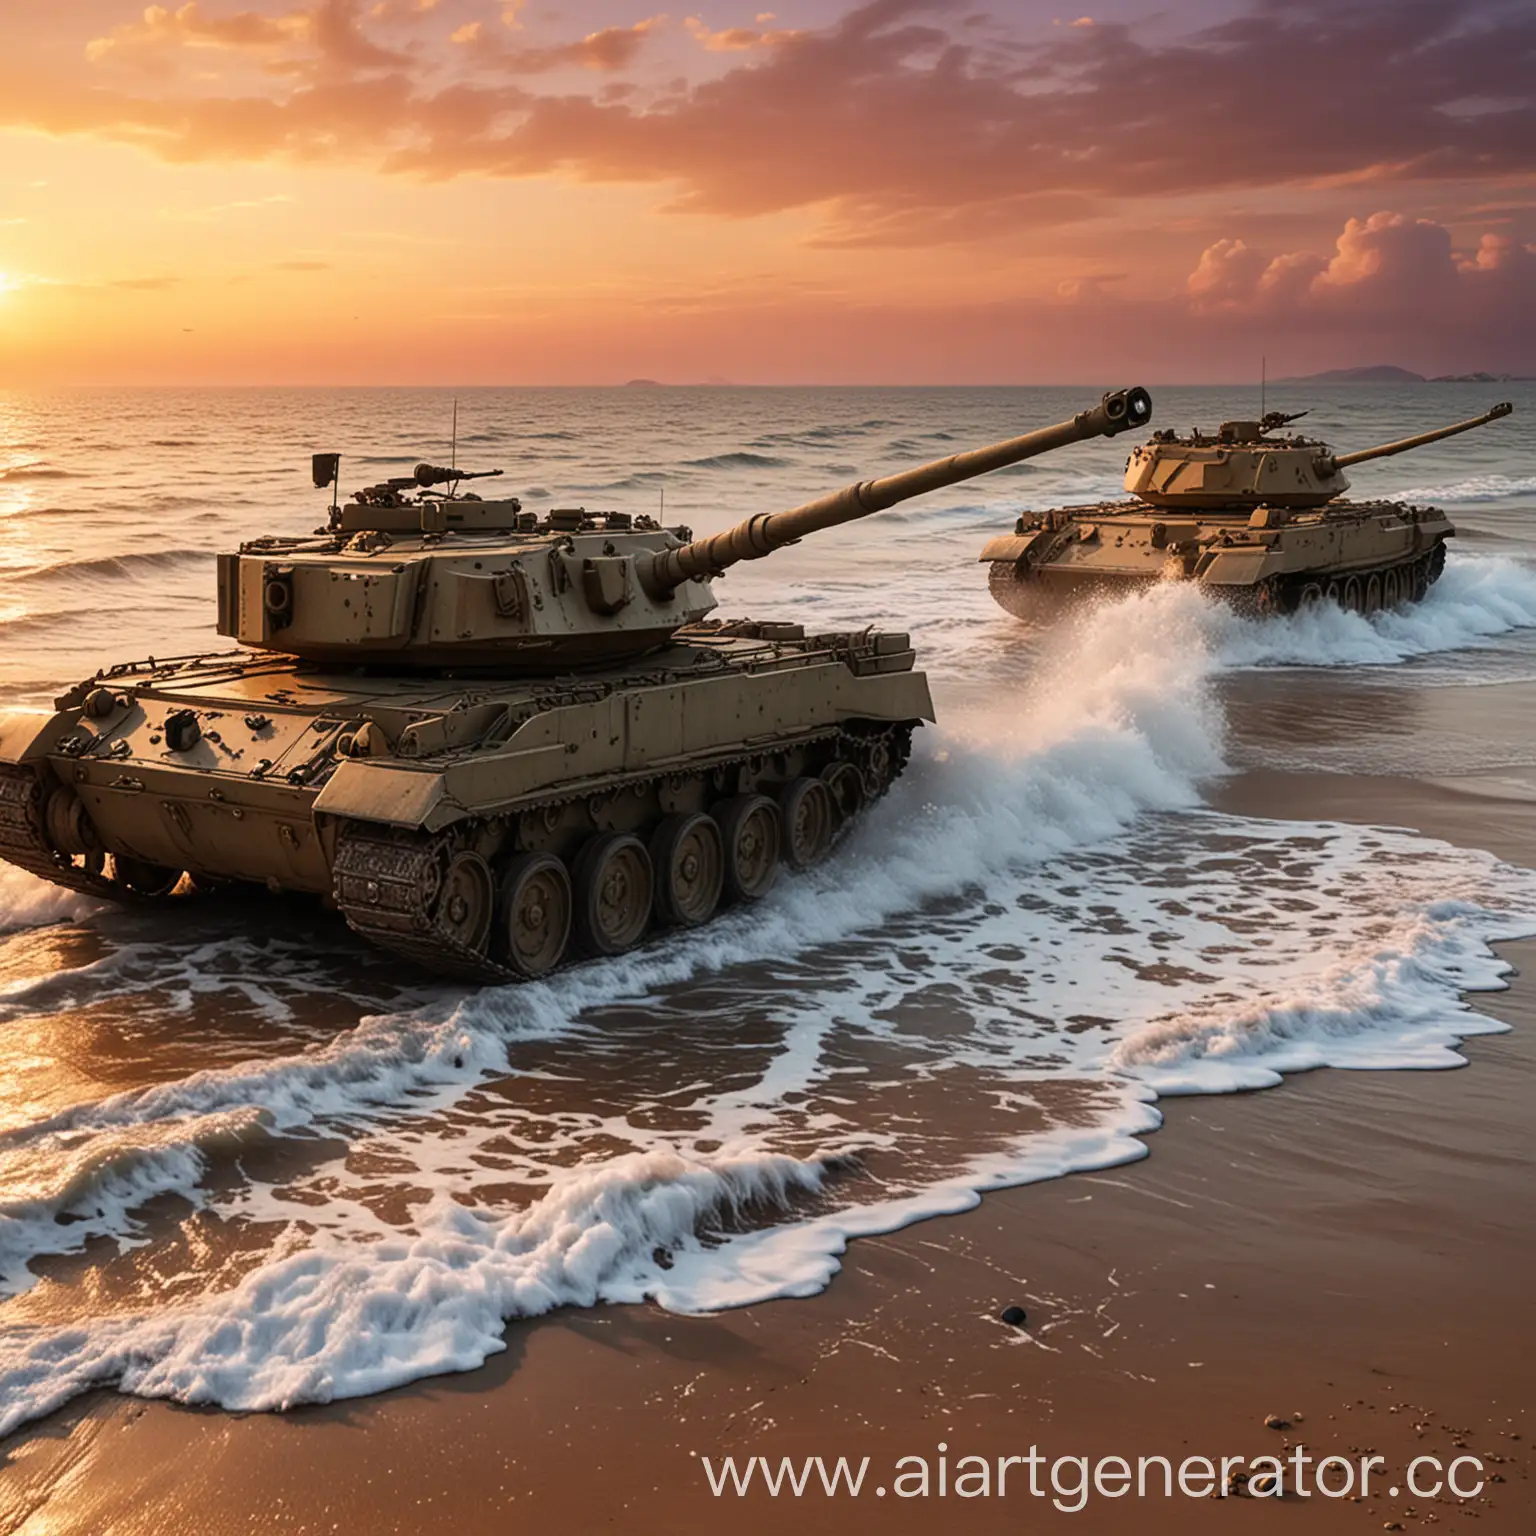 Battle-Tanks-Sunset-Sea-Shore